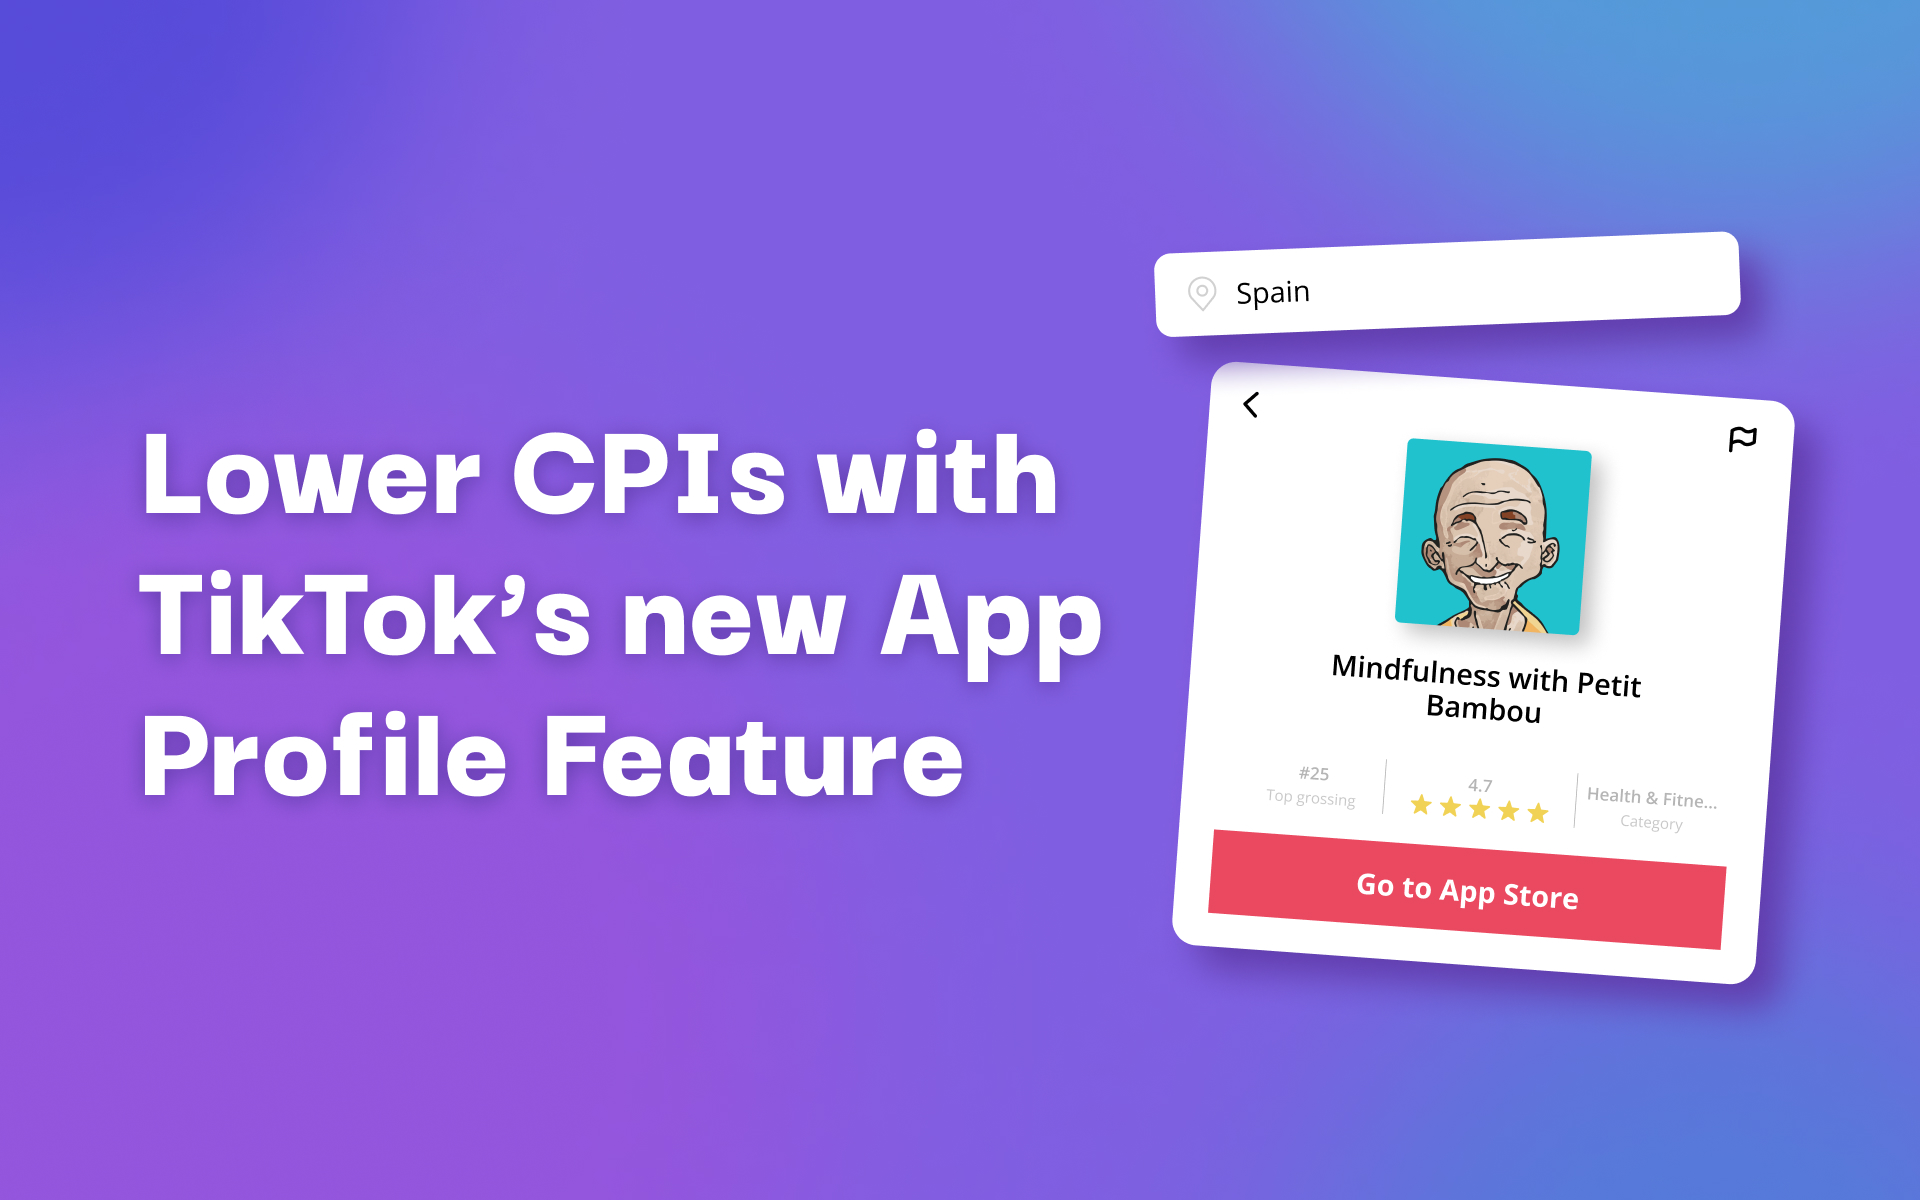 TikTok’s new App Profile Feature